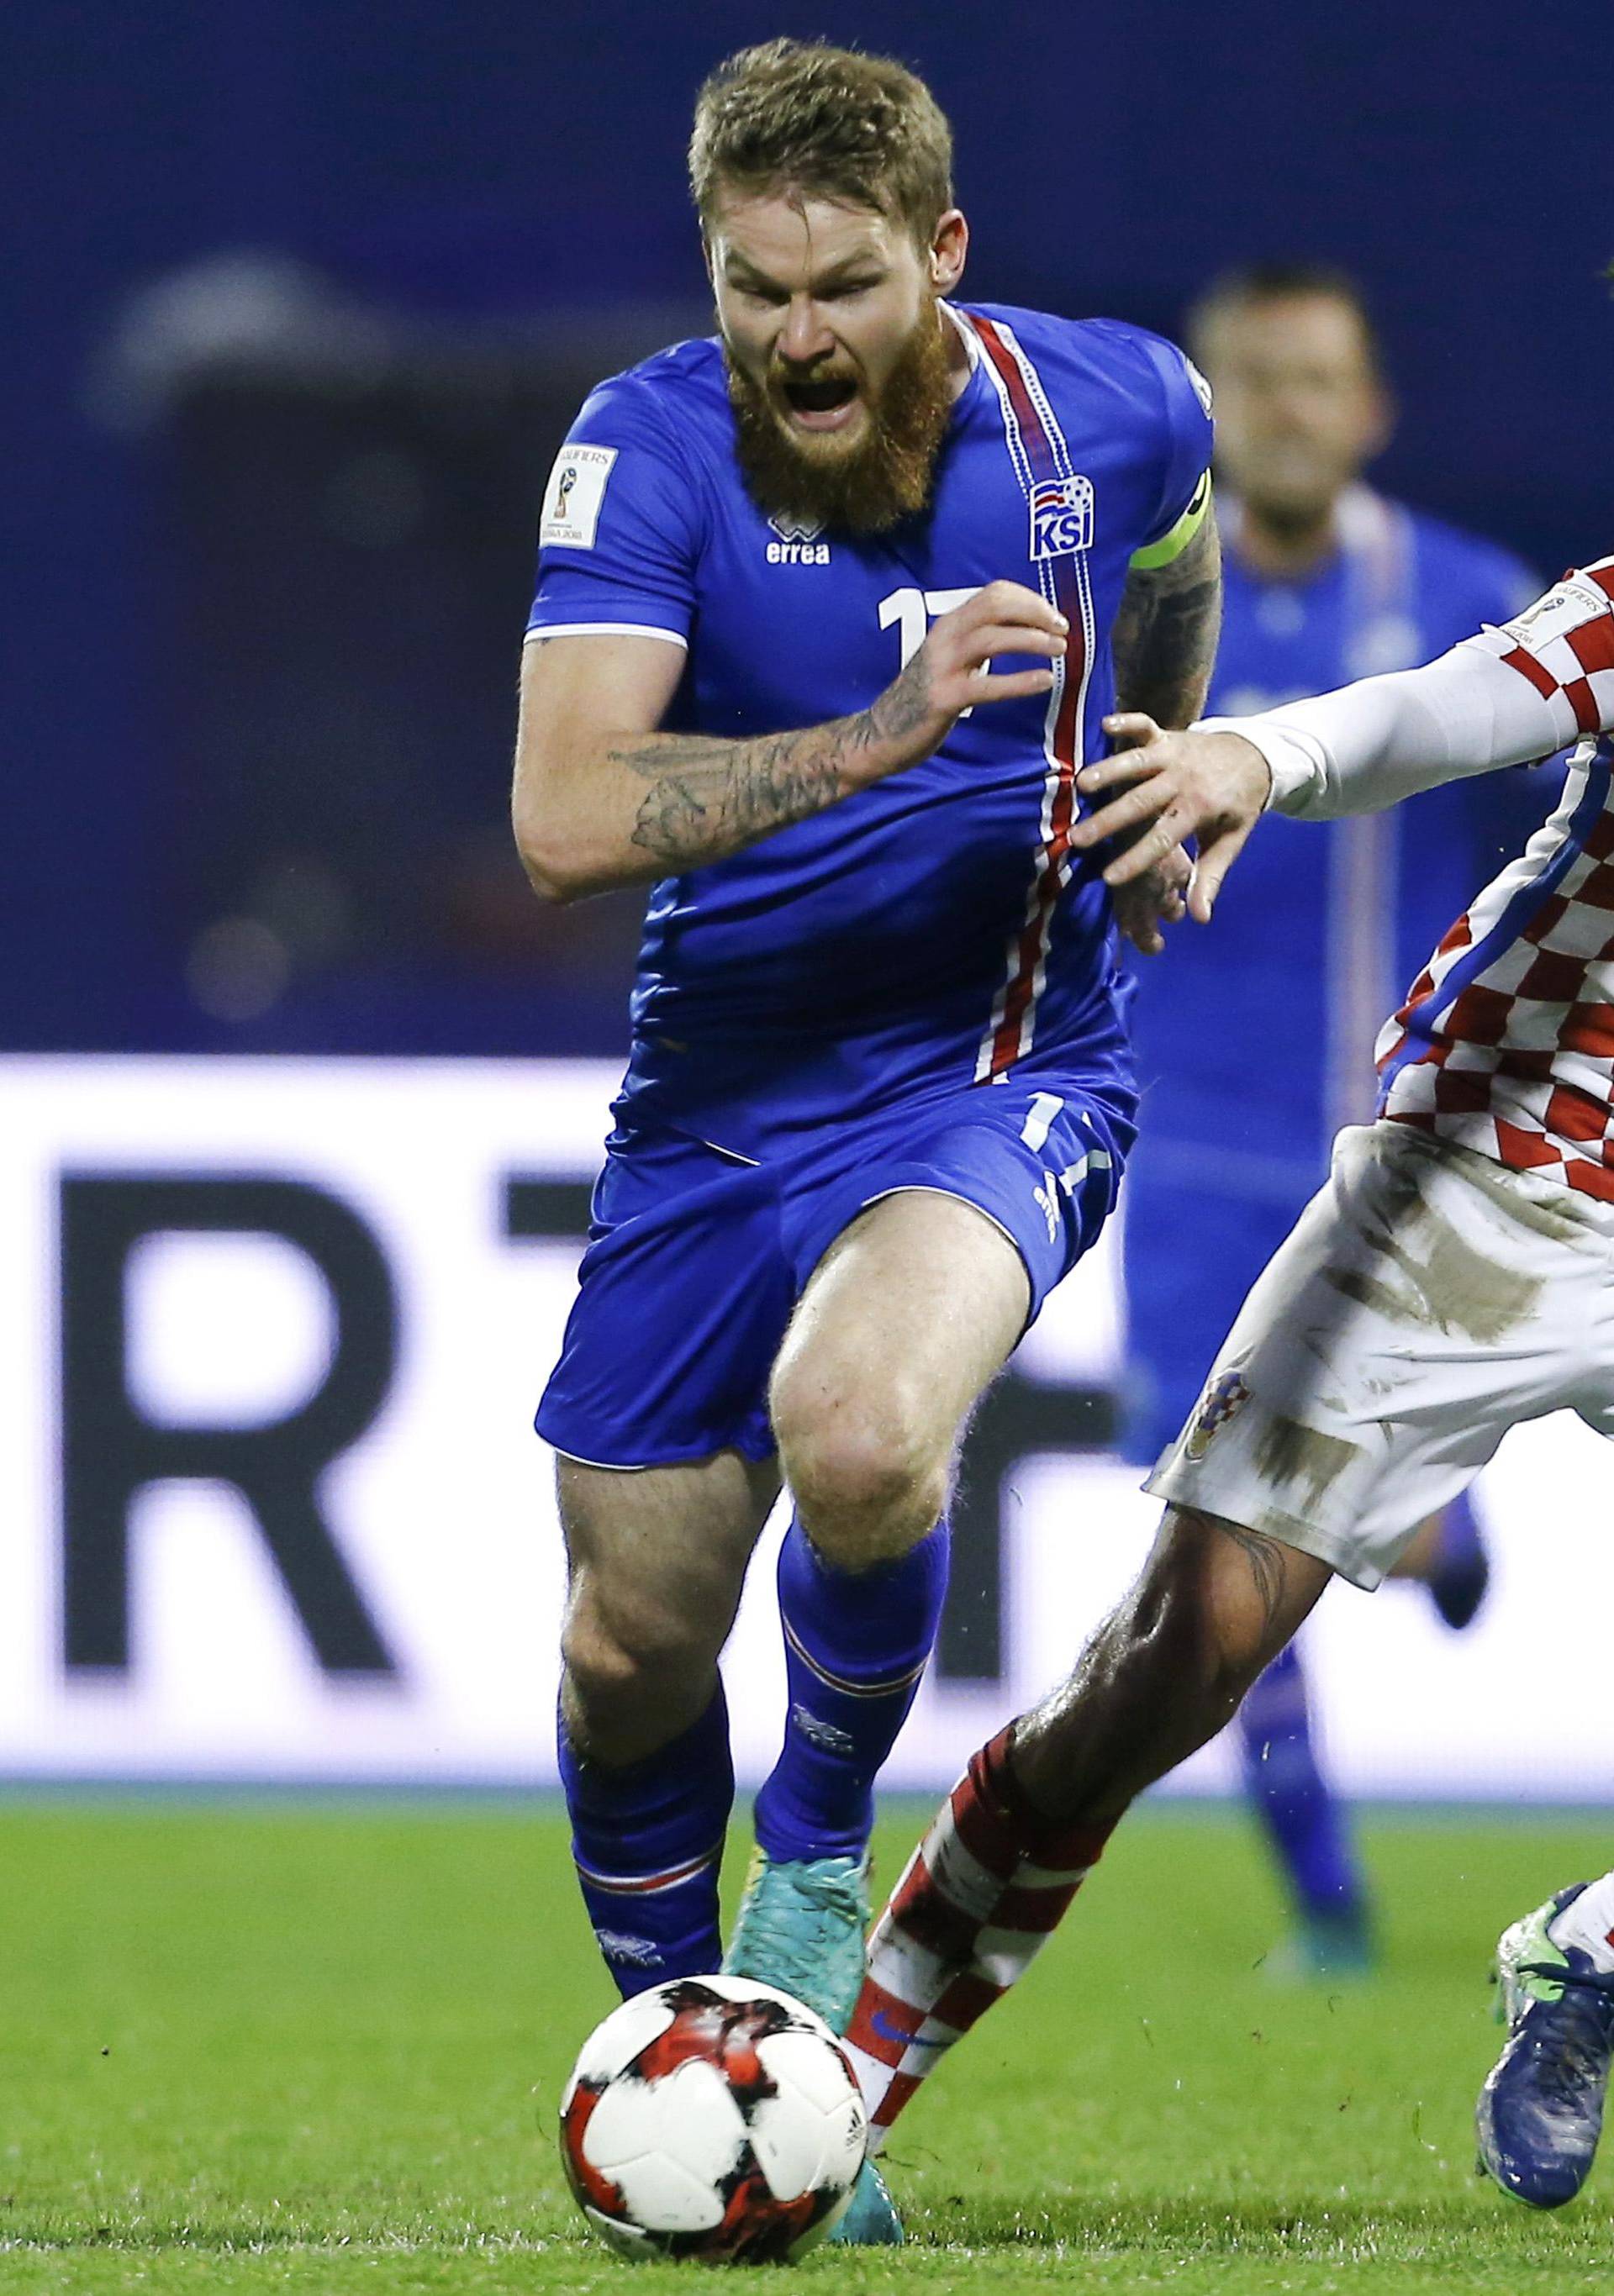 Coratia v Iceland - 2018 World Cup Qualifying European Zone